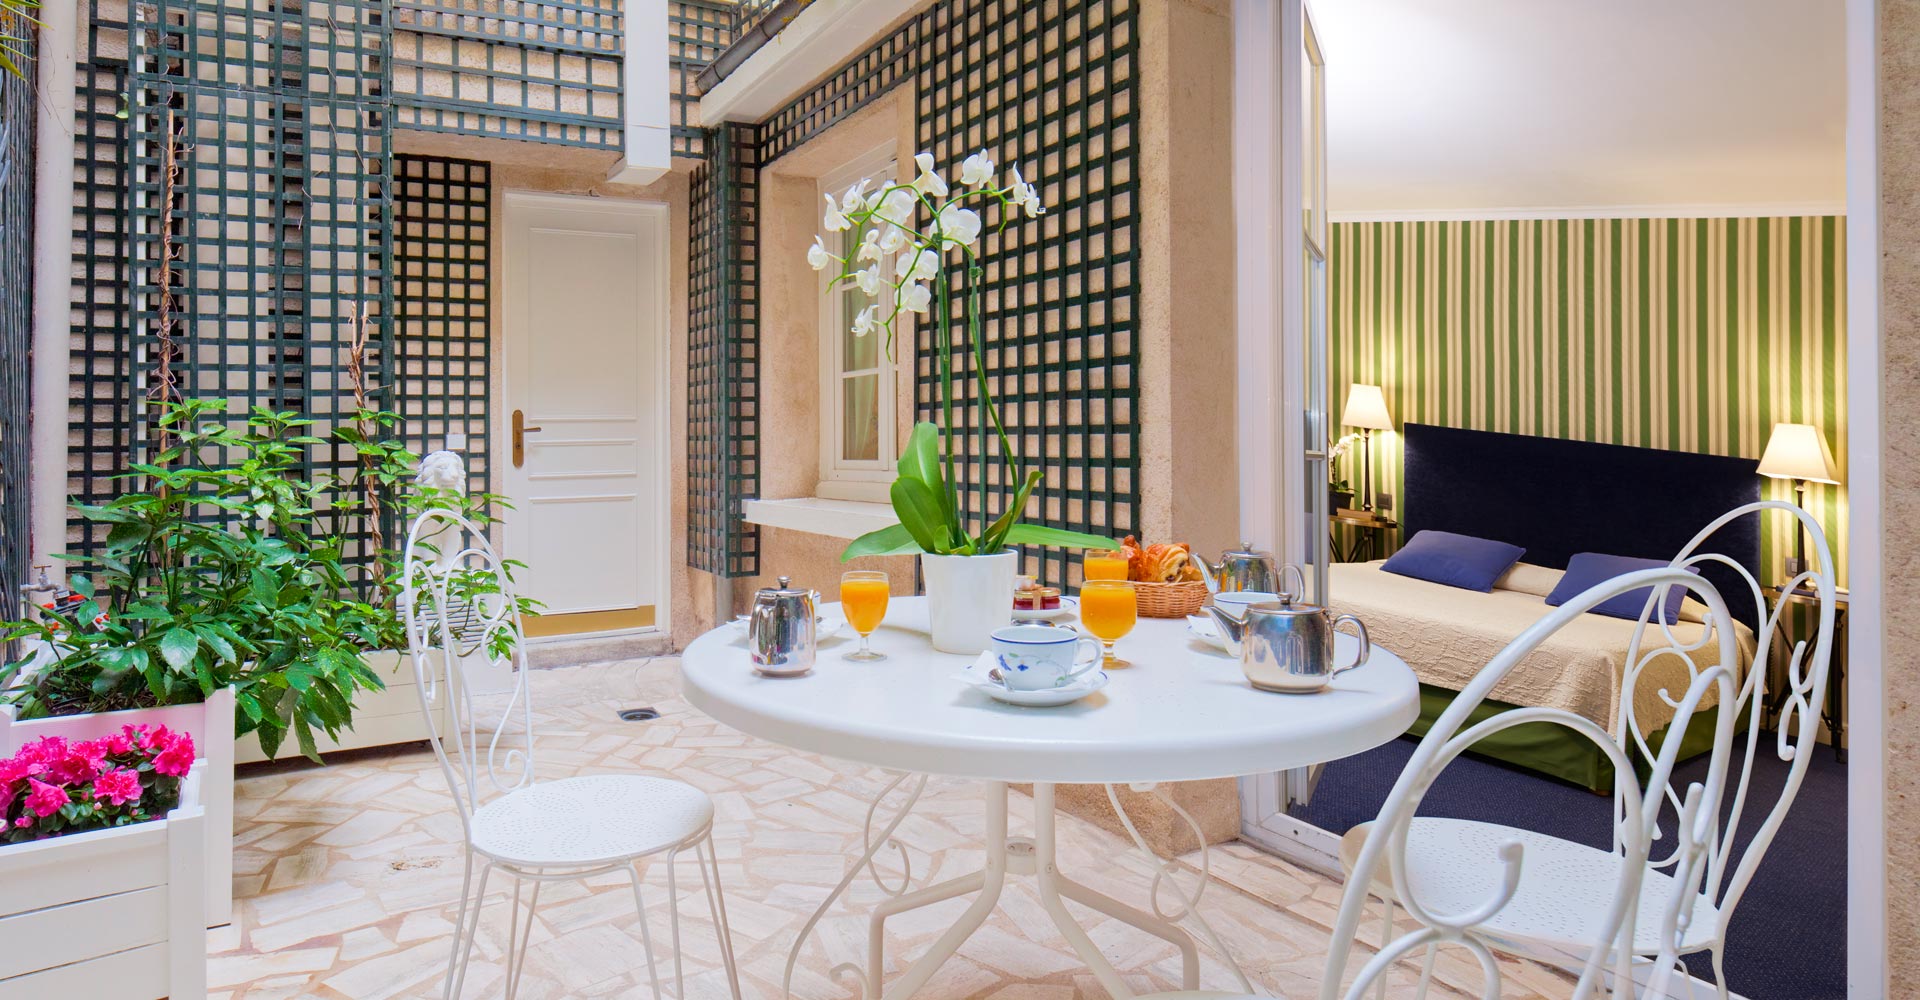 Hotel Beaubourg - Breakfast on the terrasse